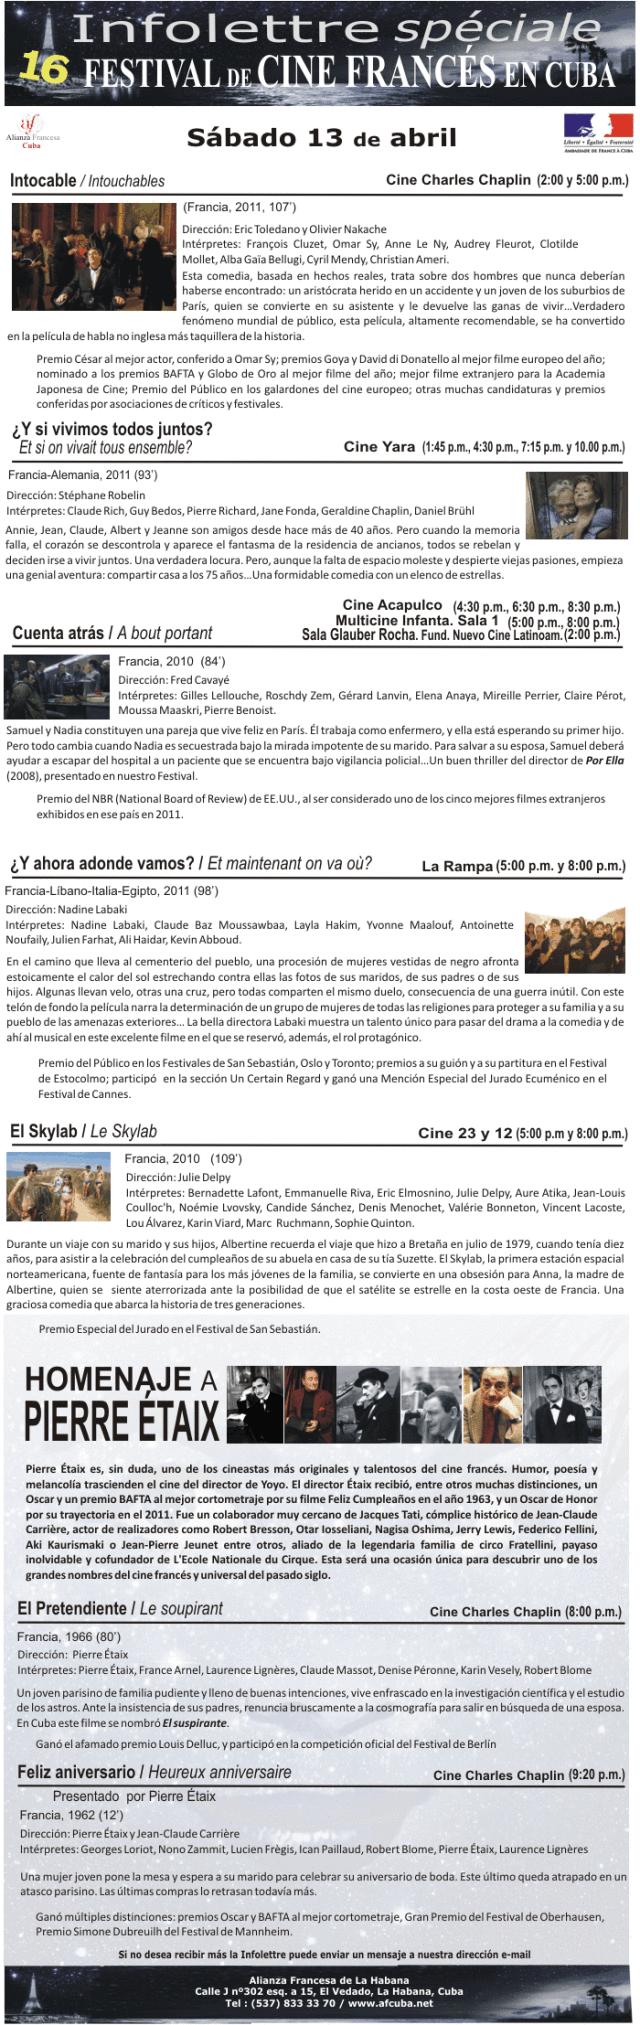 Festival de Cine Francés: Programa 13 de abril